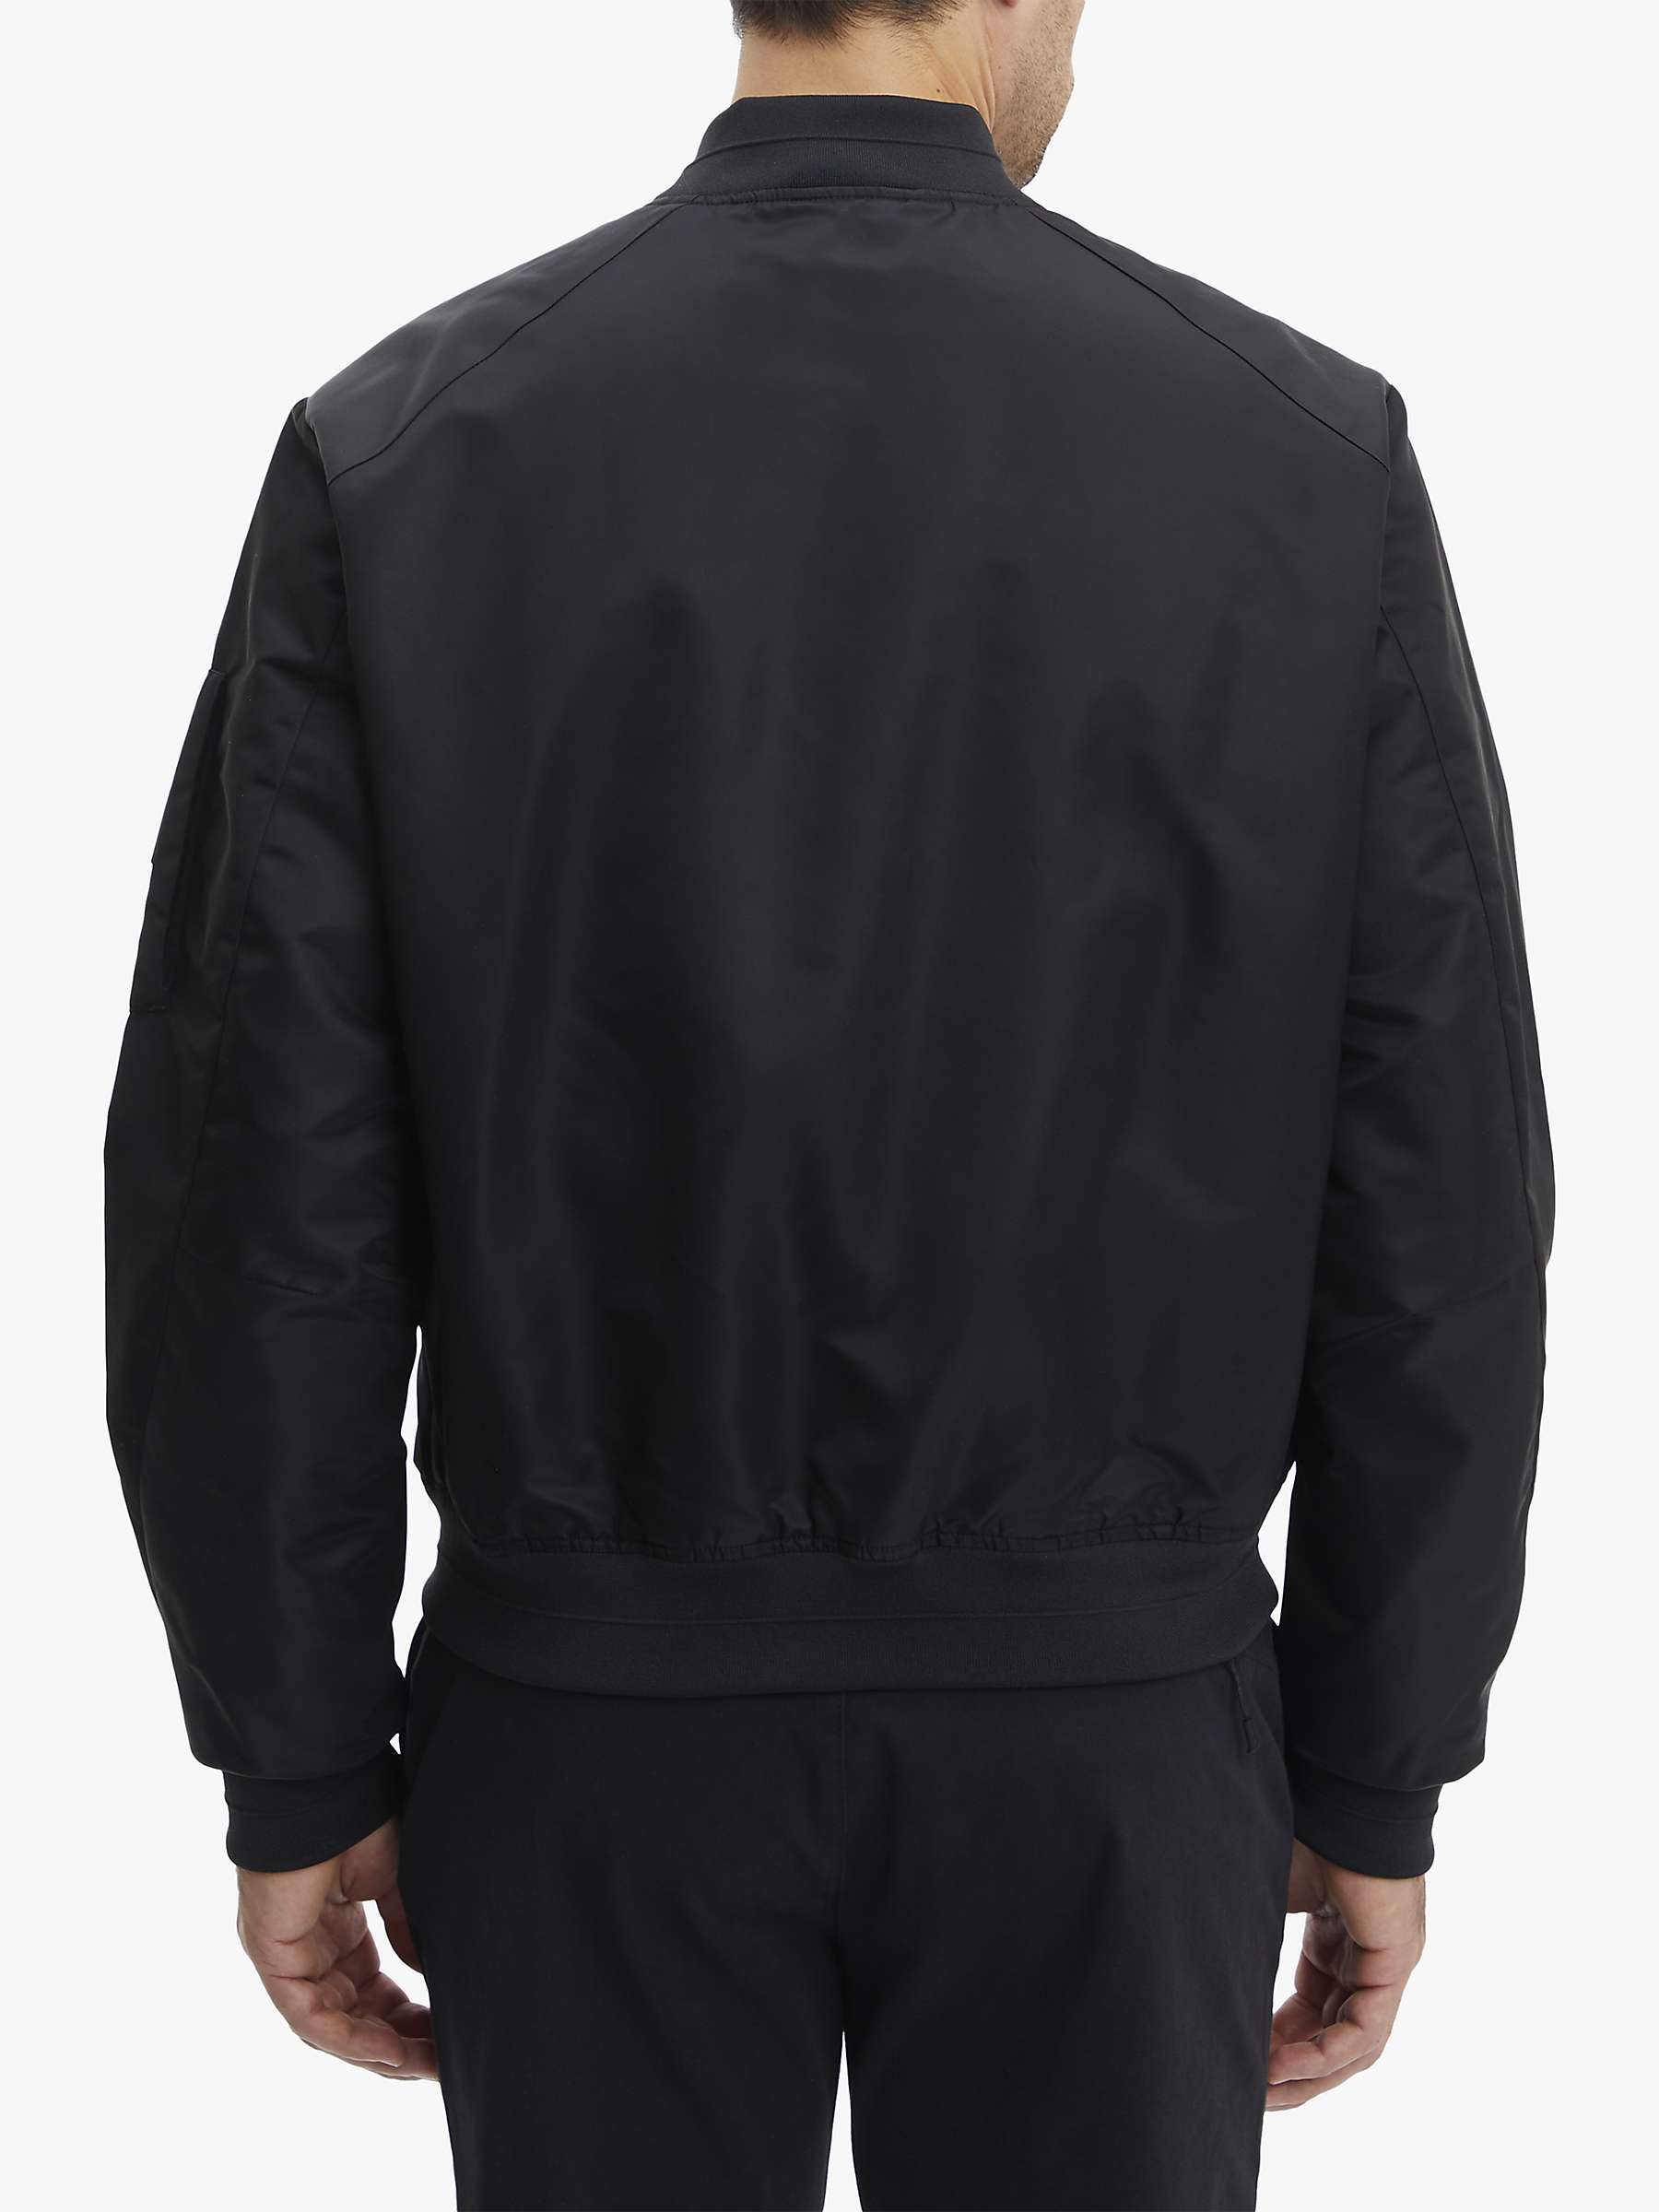 Calvin Klein Light Hero Bomber Jacket, CK Black at John Lewis & Partners